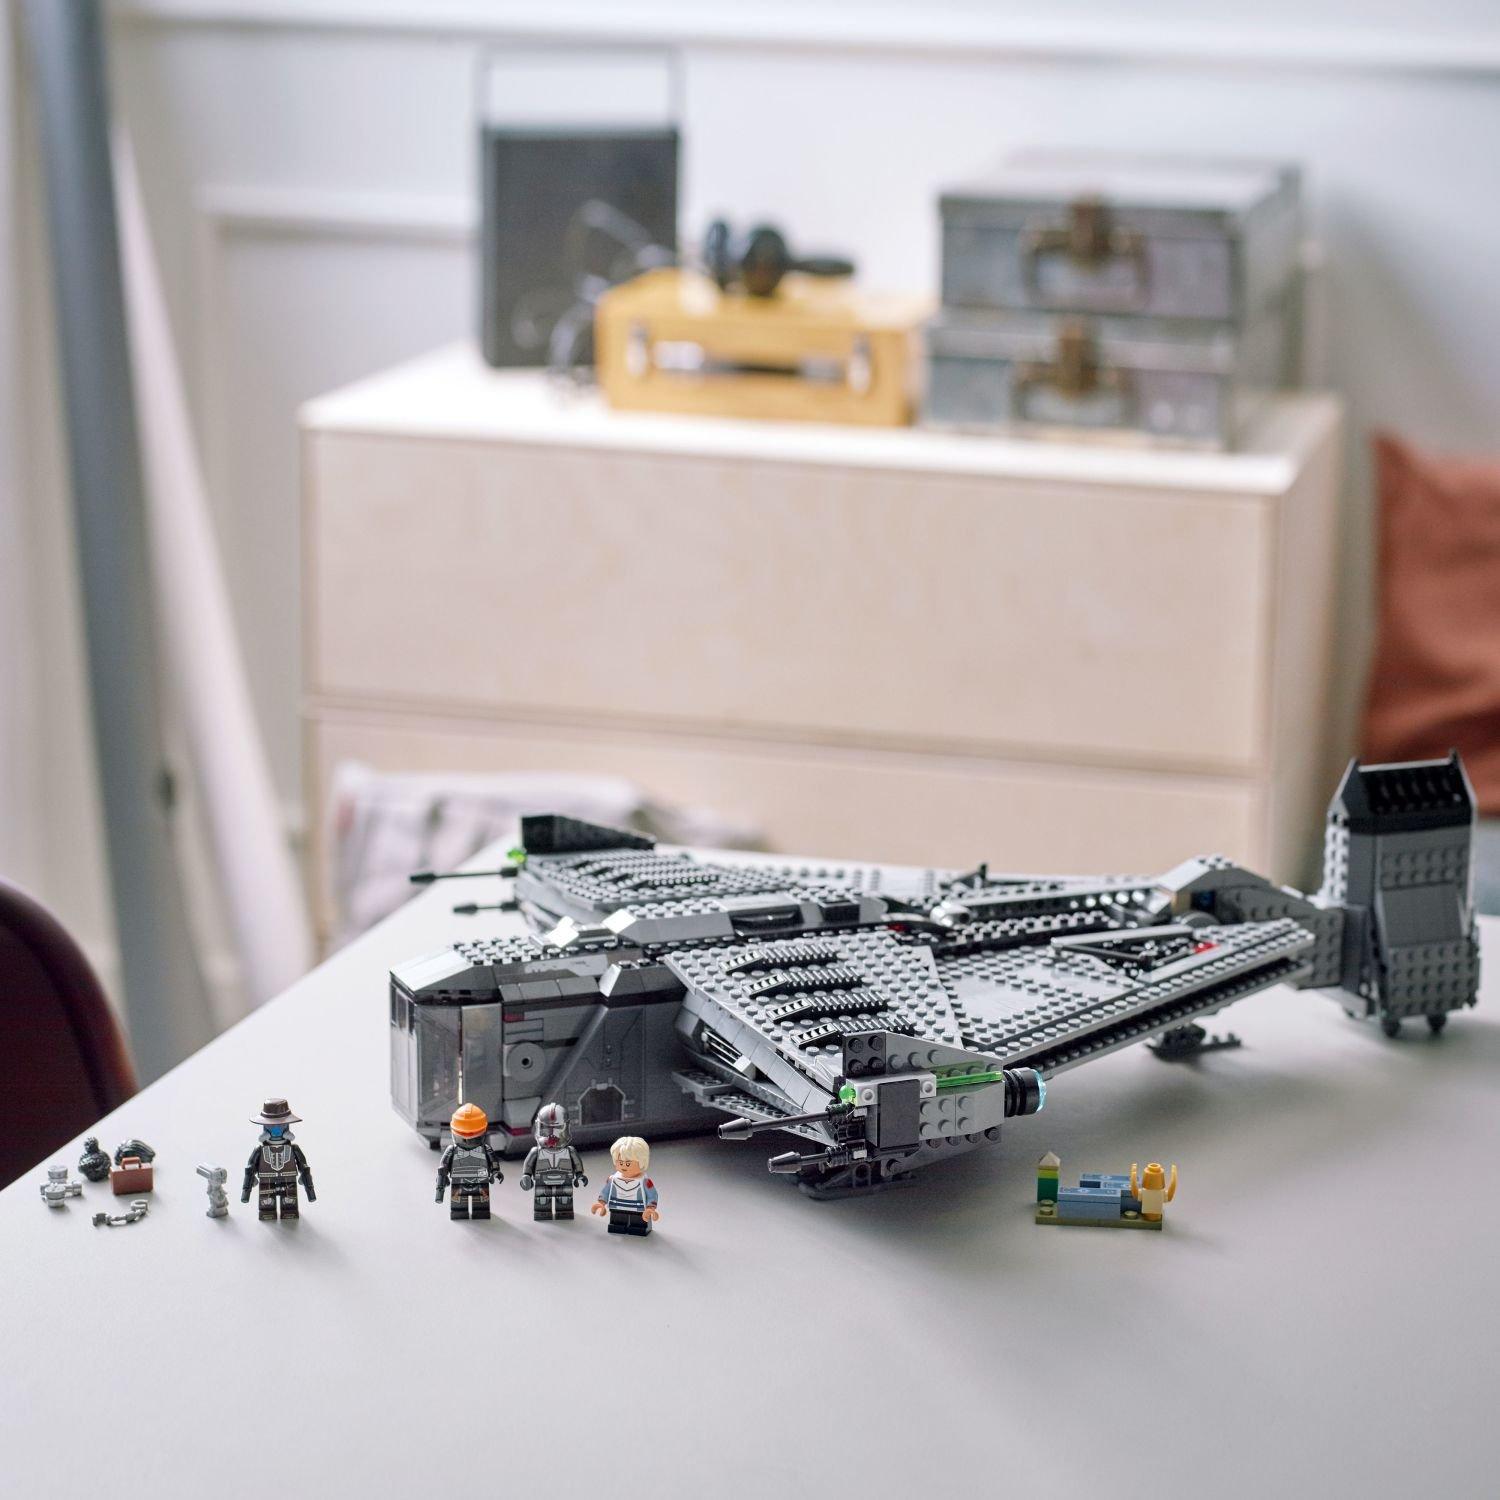 LEGO Star Wars The Justifier 75323 Building Kit